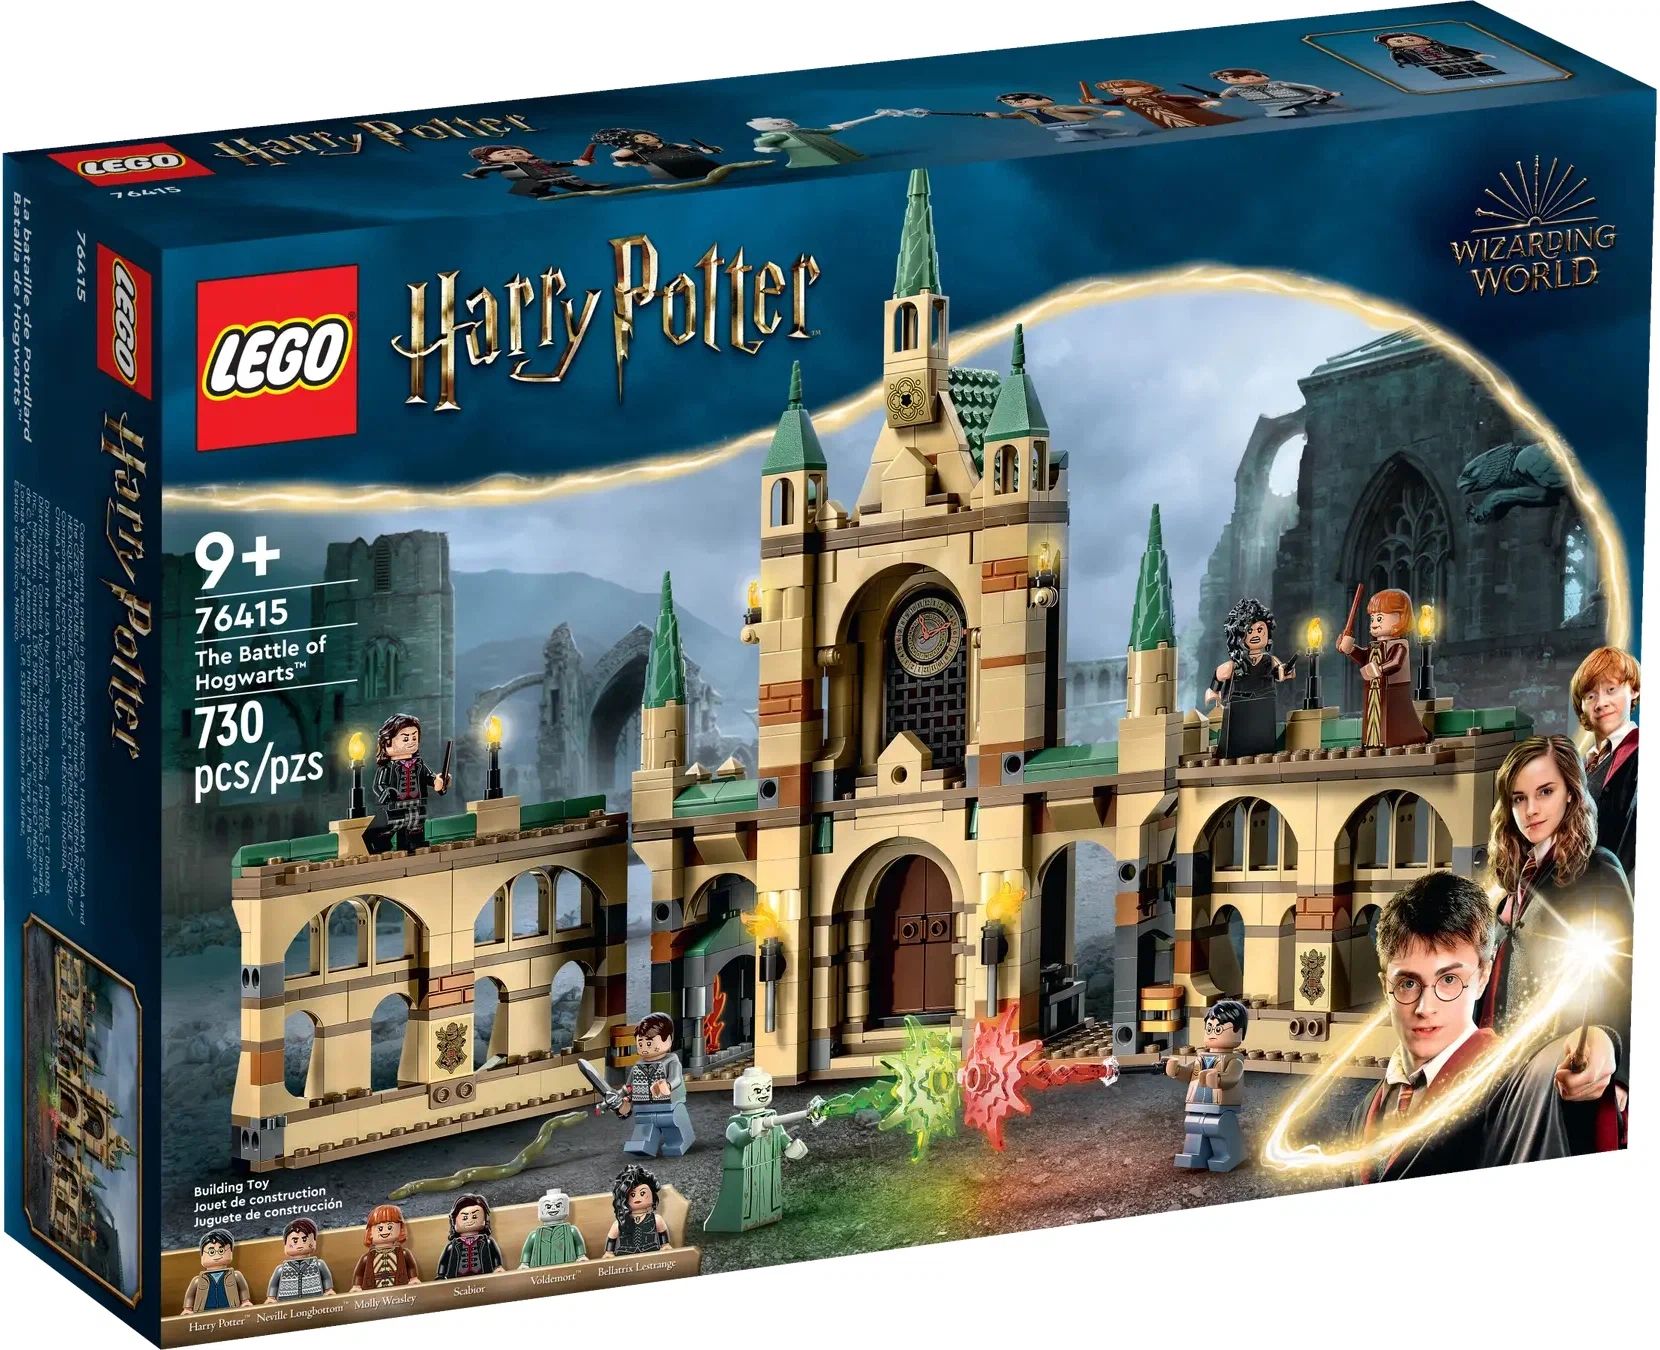 Конструктор LEGO Harry Potter Битва за Хогвартс, 730 деталей, 9+, 76415 конструктор lego harry potter учёба в хогвартсе урок заклинаний